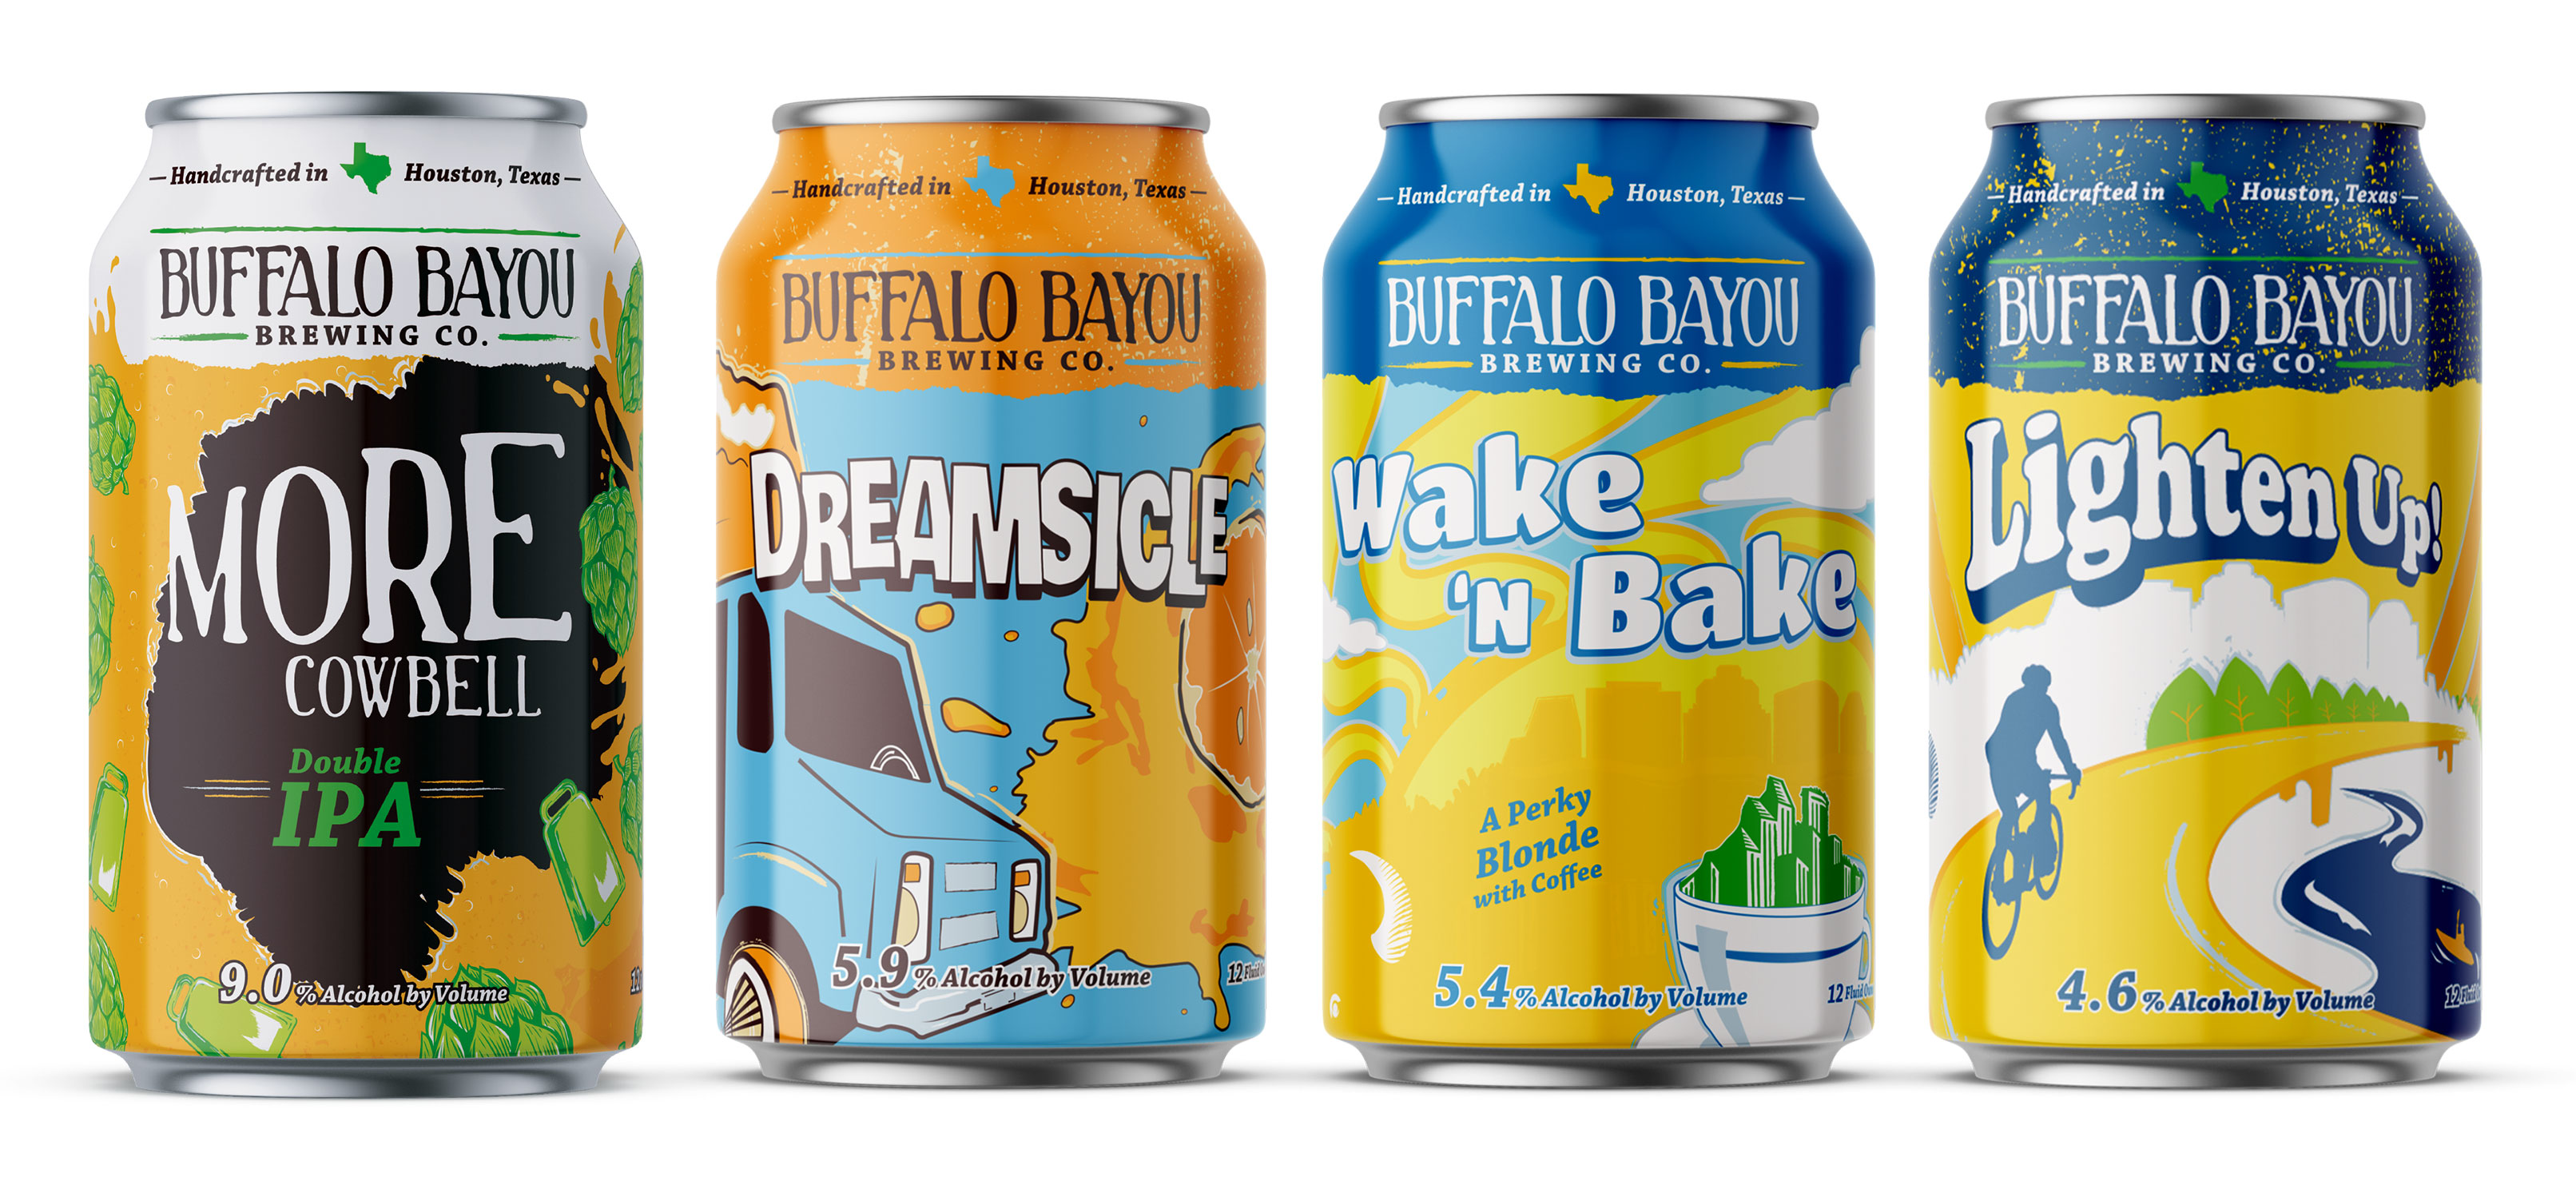 Buffalo Bayou Brewing Company - Craft Beer Cans